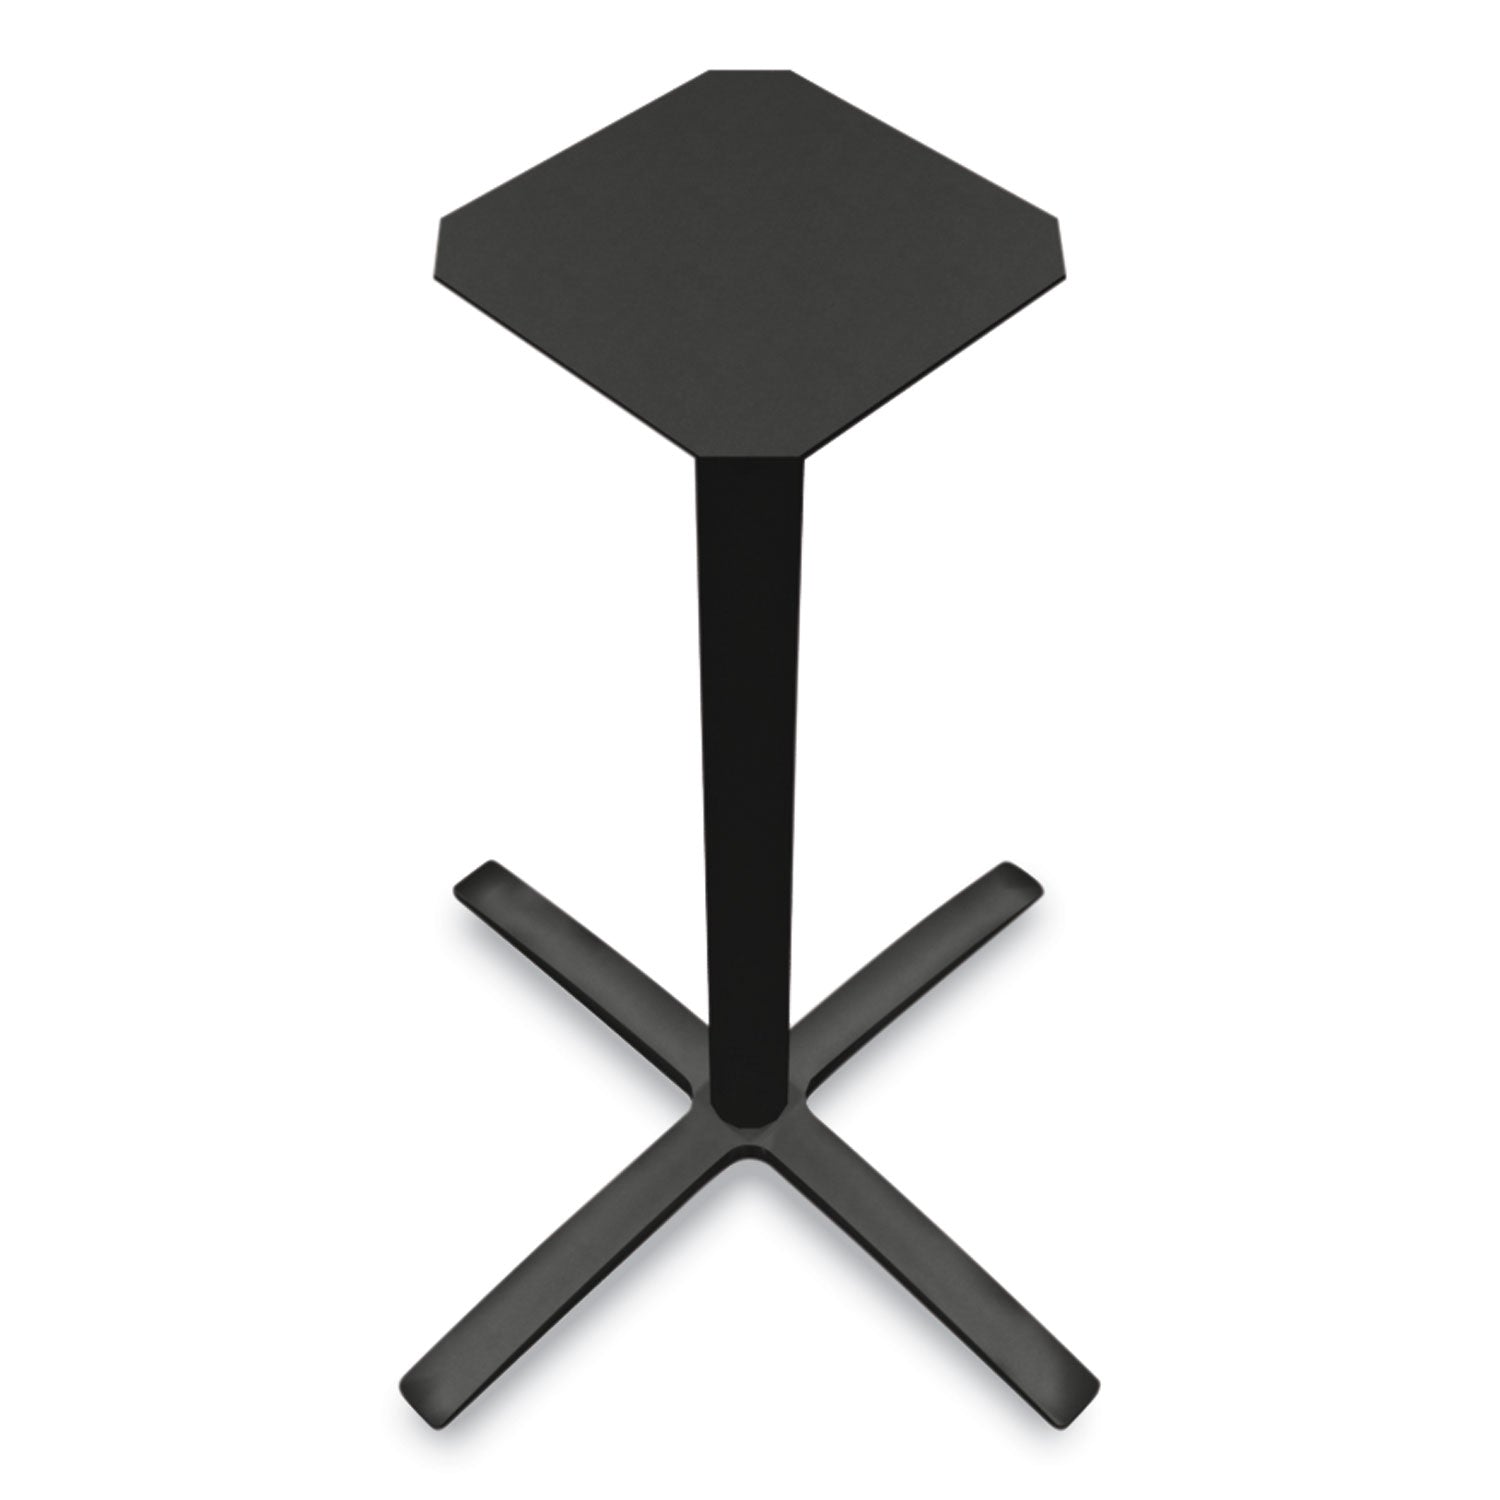 between-standing-height-x-base-for-42-table-tops-3268w-x-4112h-black_honbtx42lcbk - 3